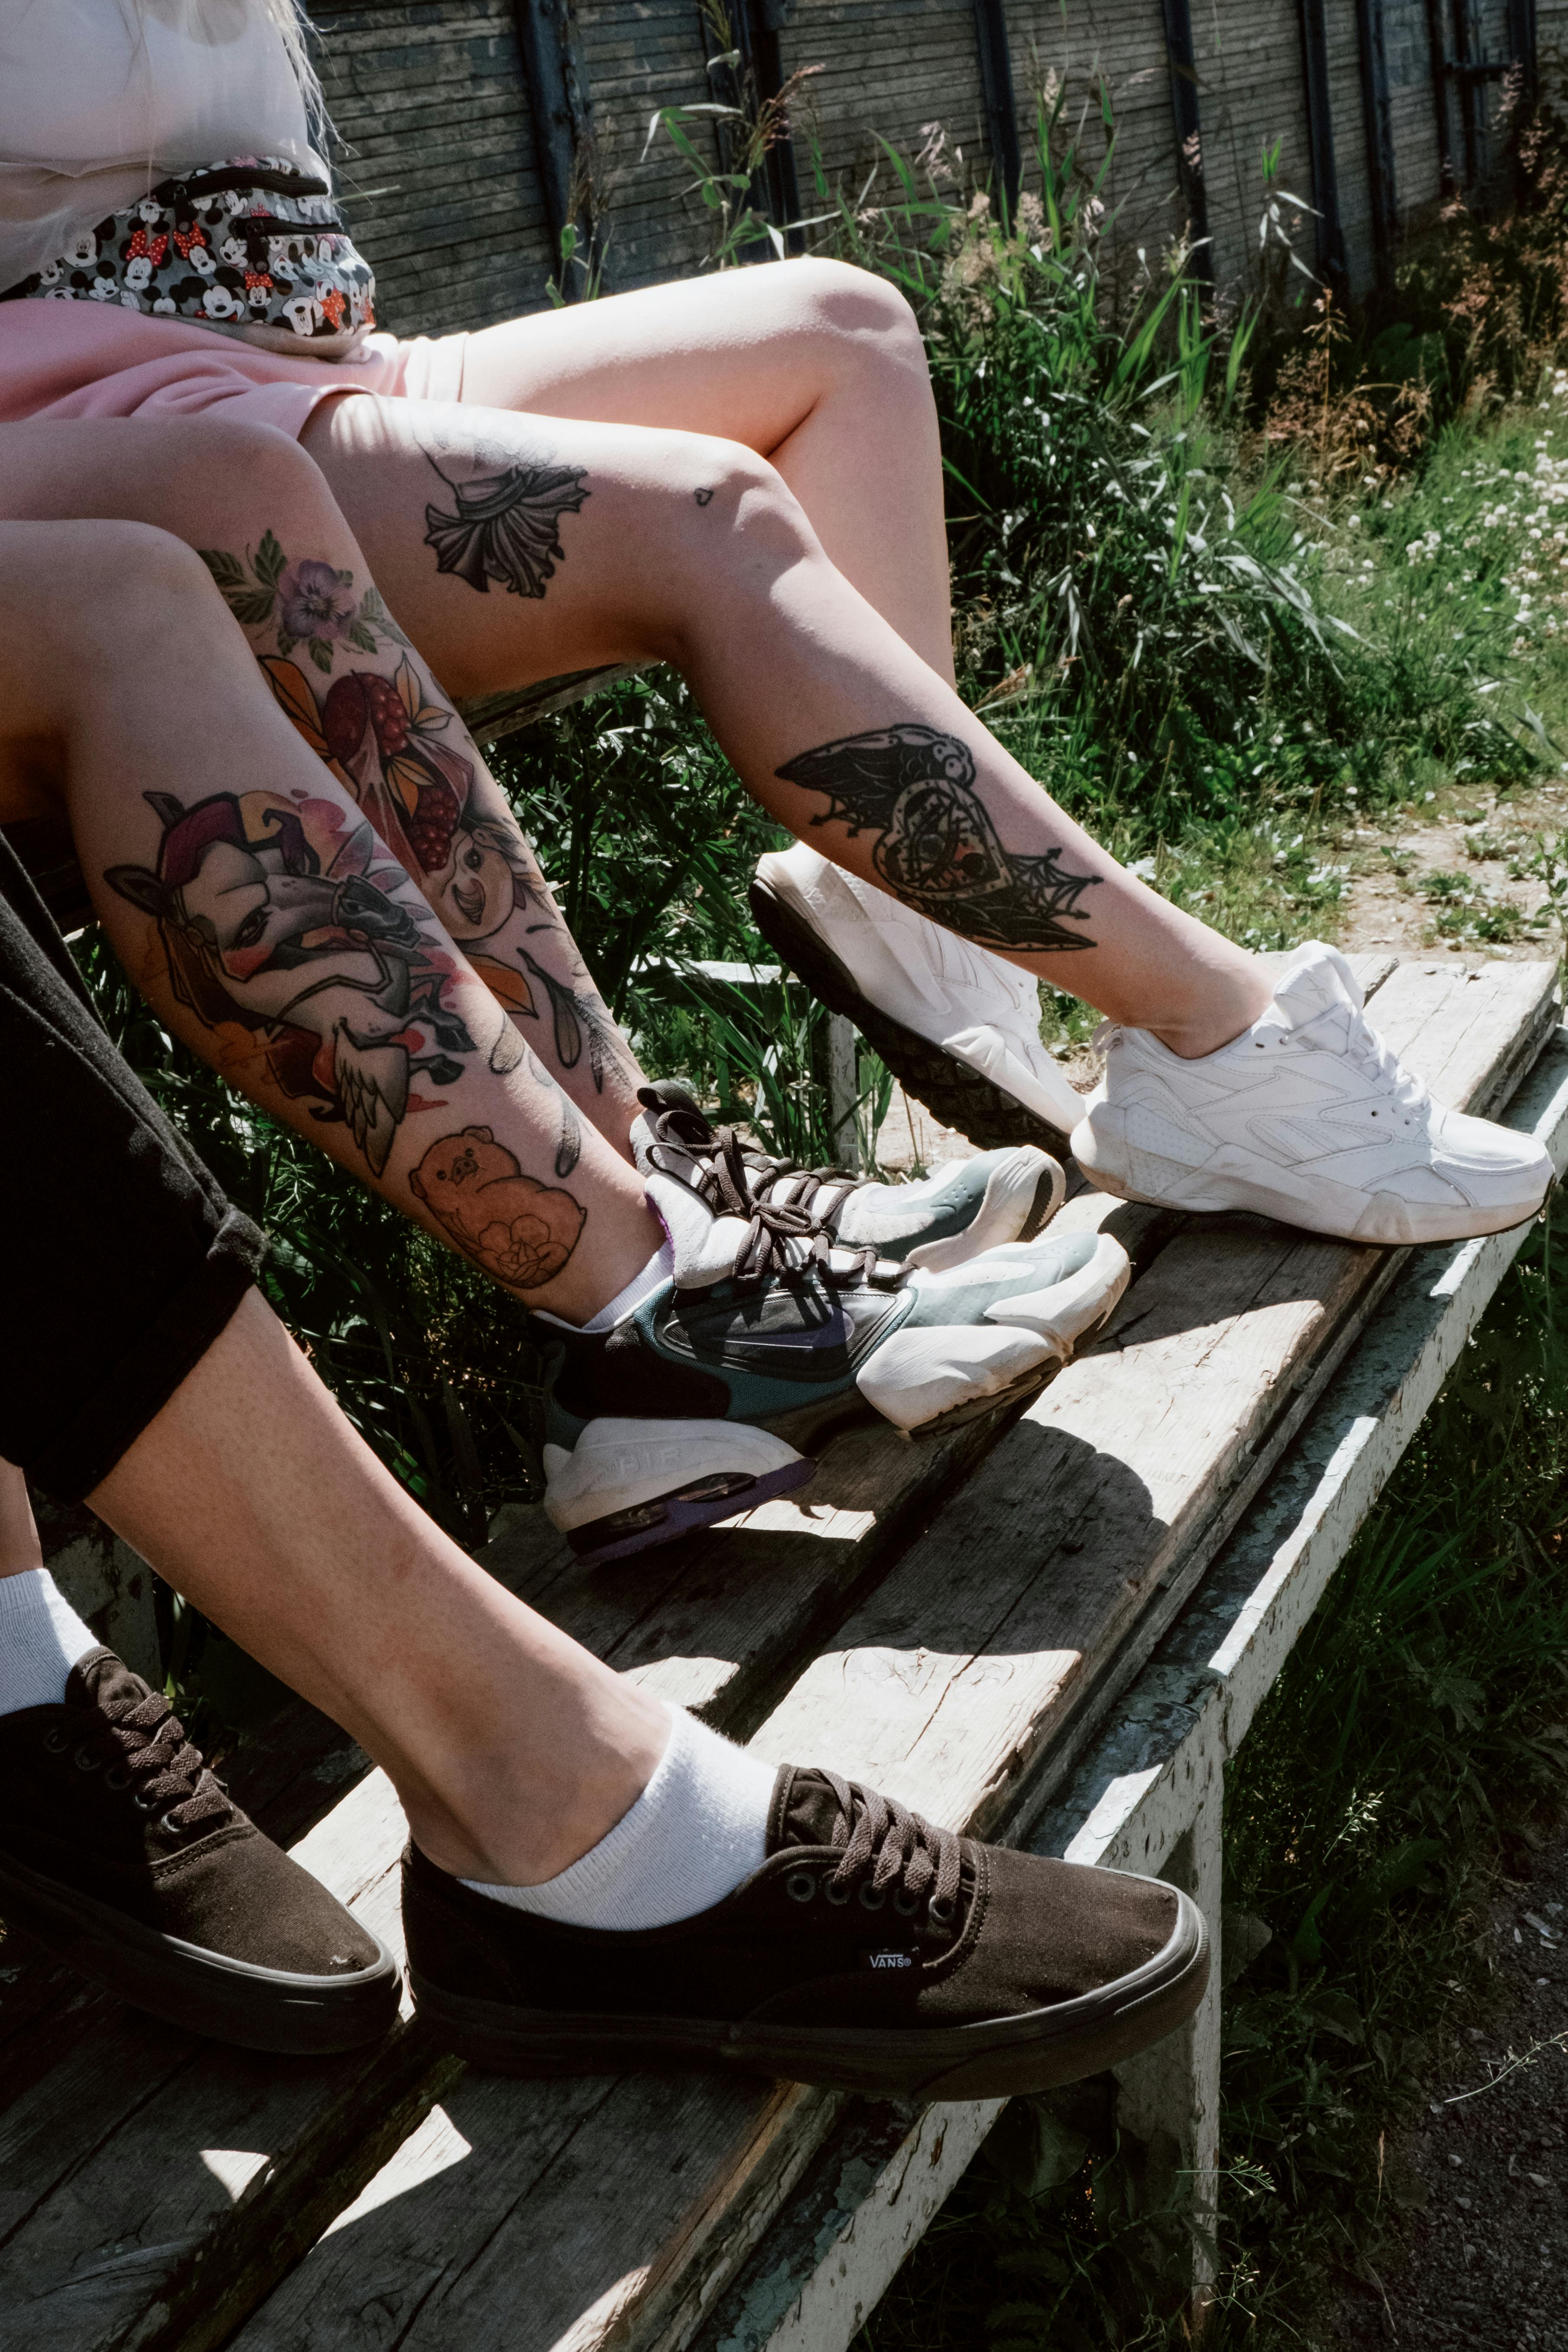 Women with Leg Tattoos Sitting on the Bleachers · Free Stock Photo